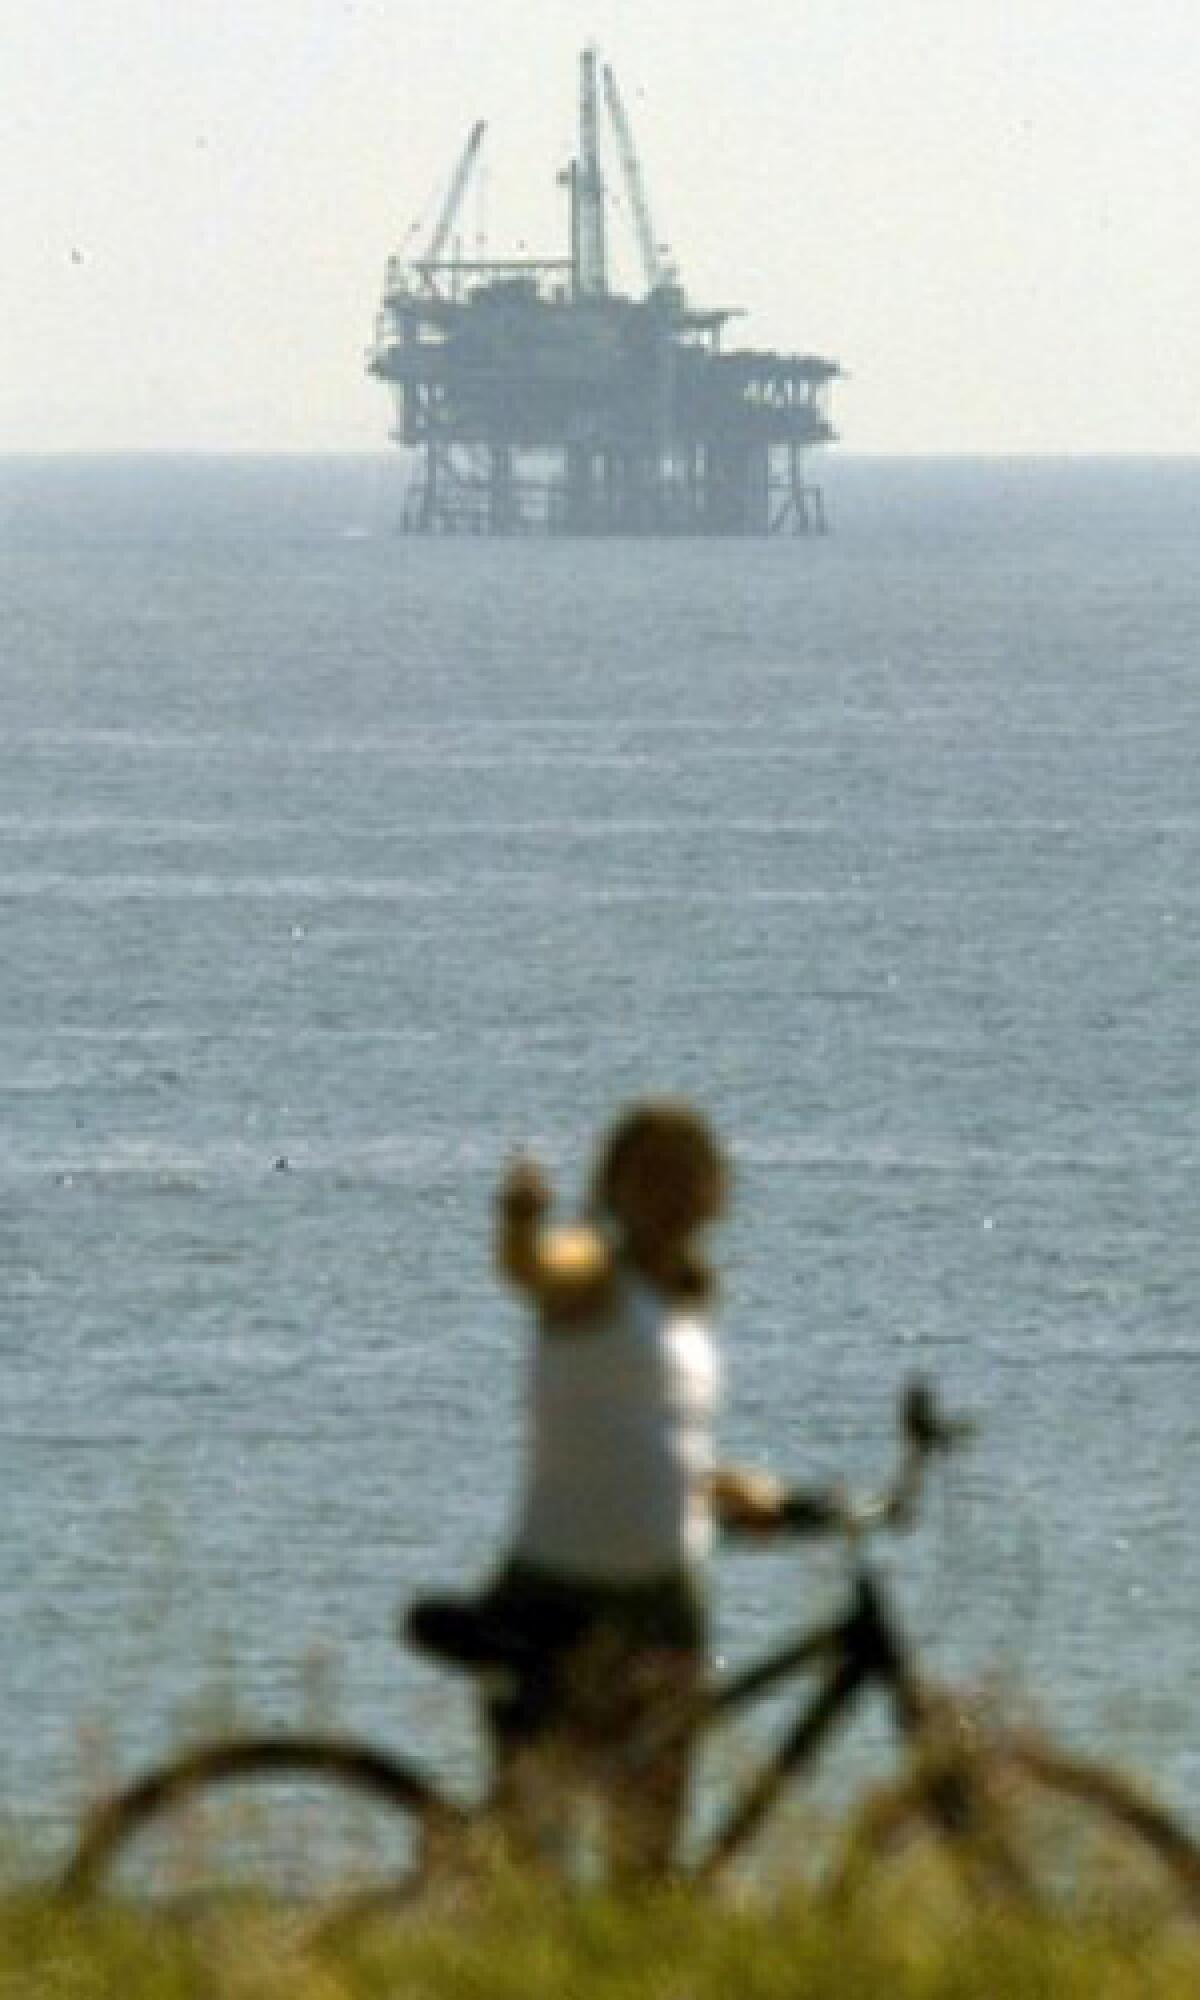 A rig near Santa Barbara. The notion of renewed drilling off the coast has drawn mixed reaction.